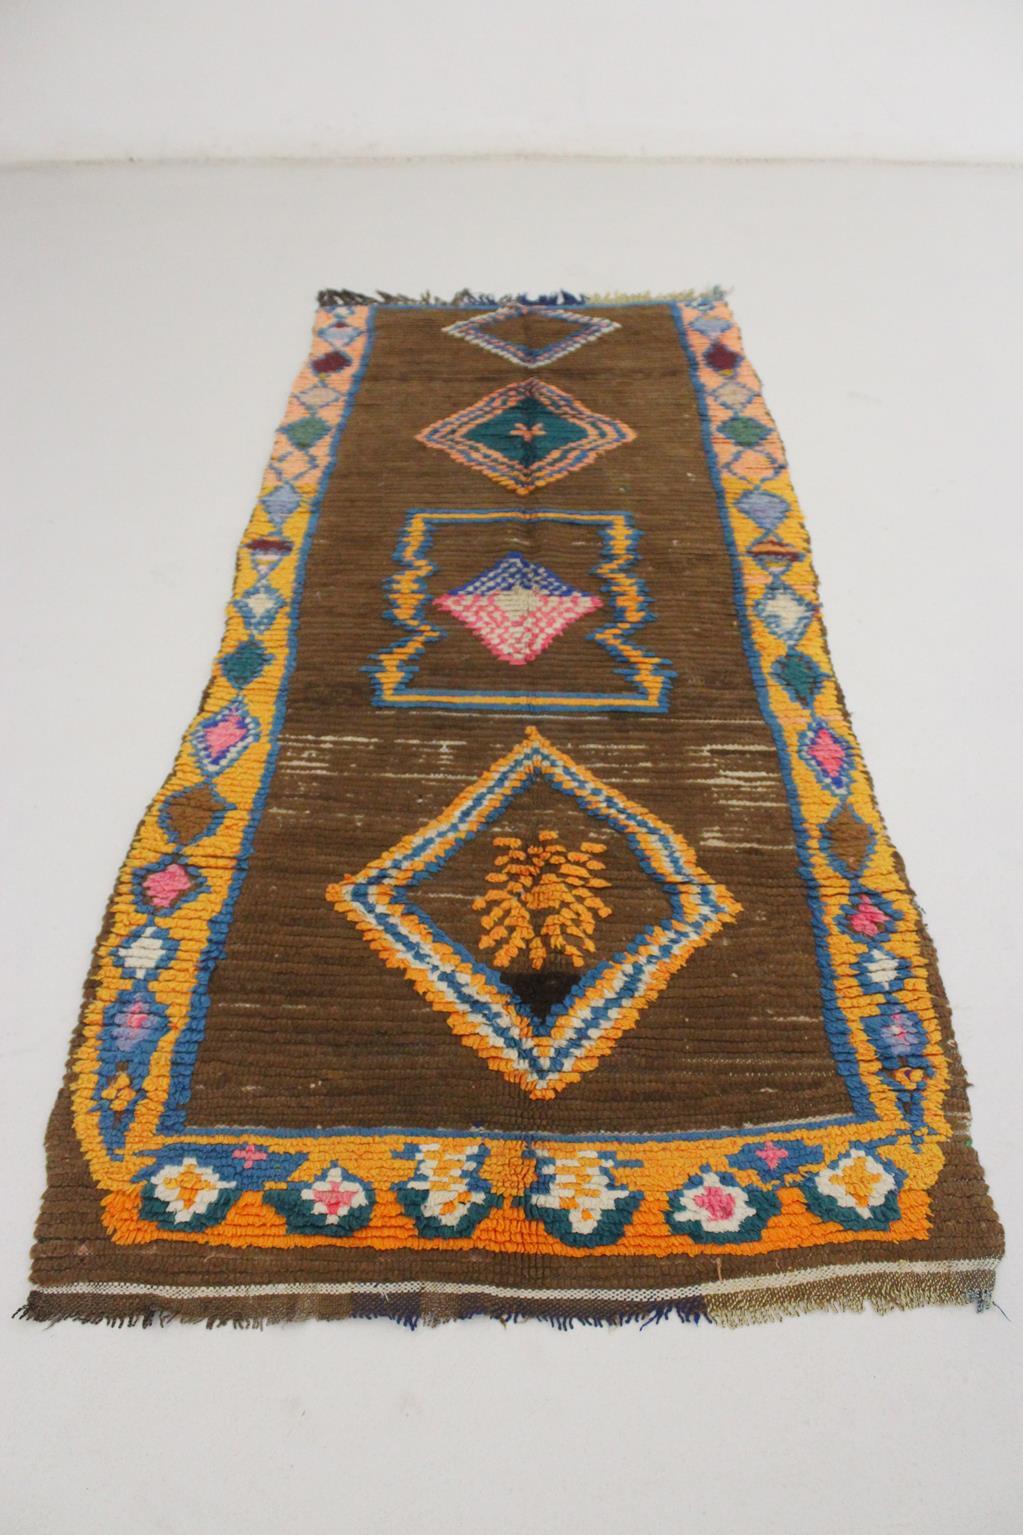 Vintage Moroccan Boujad runner rug - Brown/pink/blue - 3.2x7.5feet / 97x228cm For Sale 4